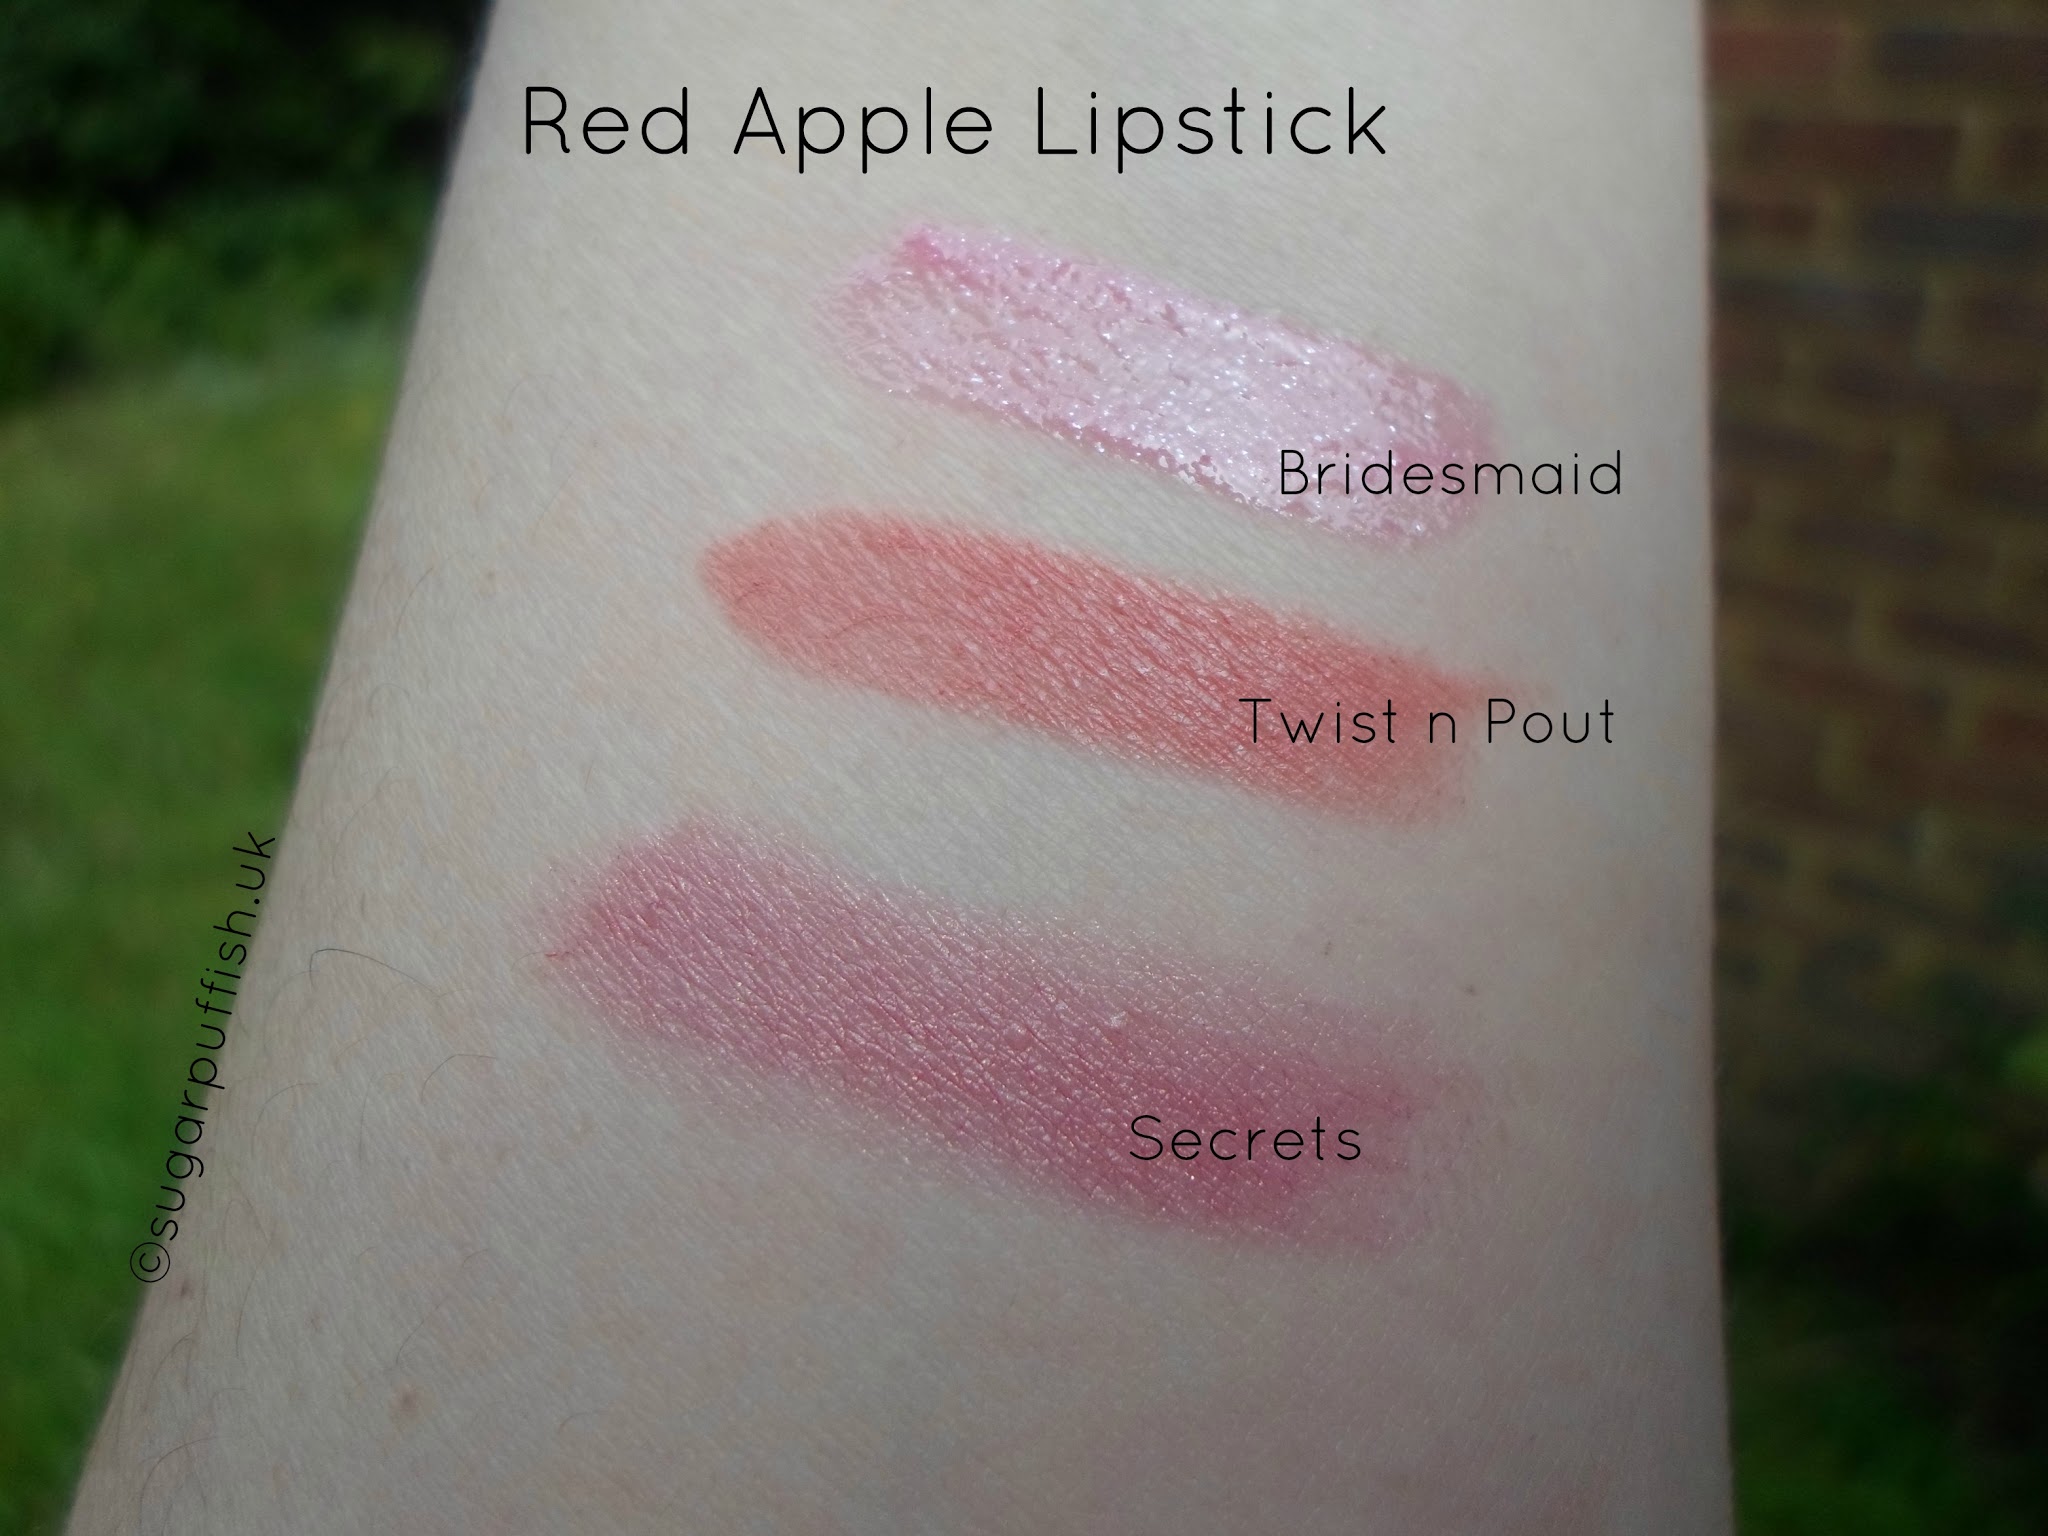 Review Red Apple Lipsticks Swatches Secrets Twist n Pout Bridesmaid